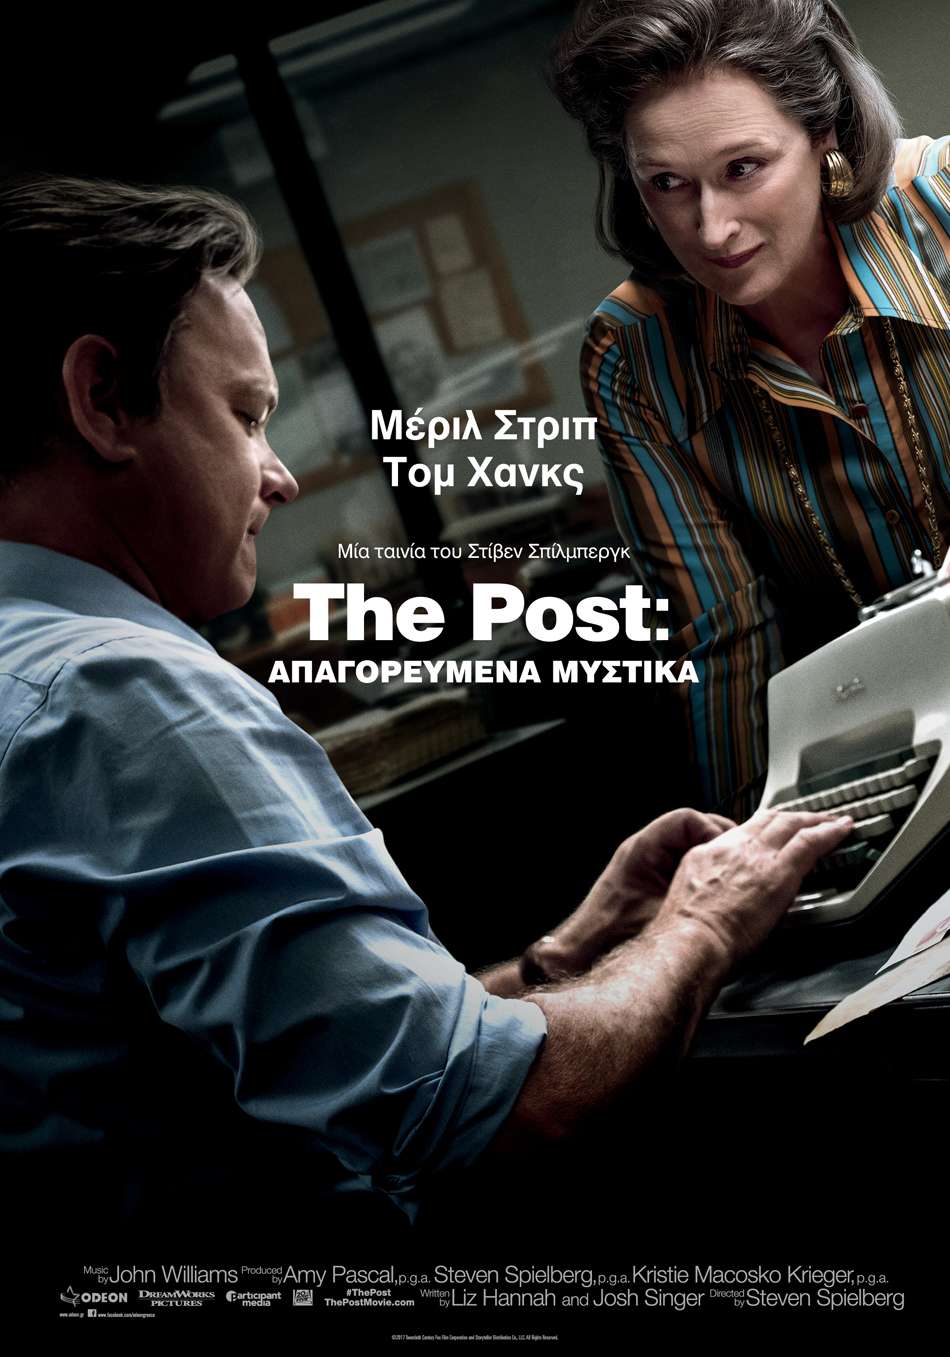 The Post: Απαγορευμένα Μυστικά (The Post) Poster Πόστερ